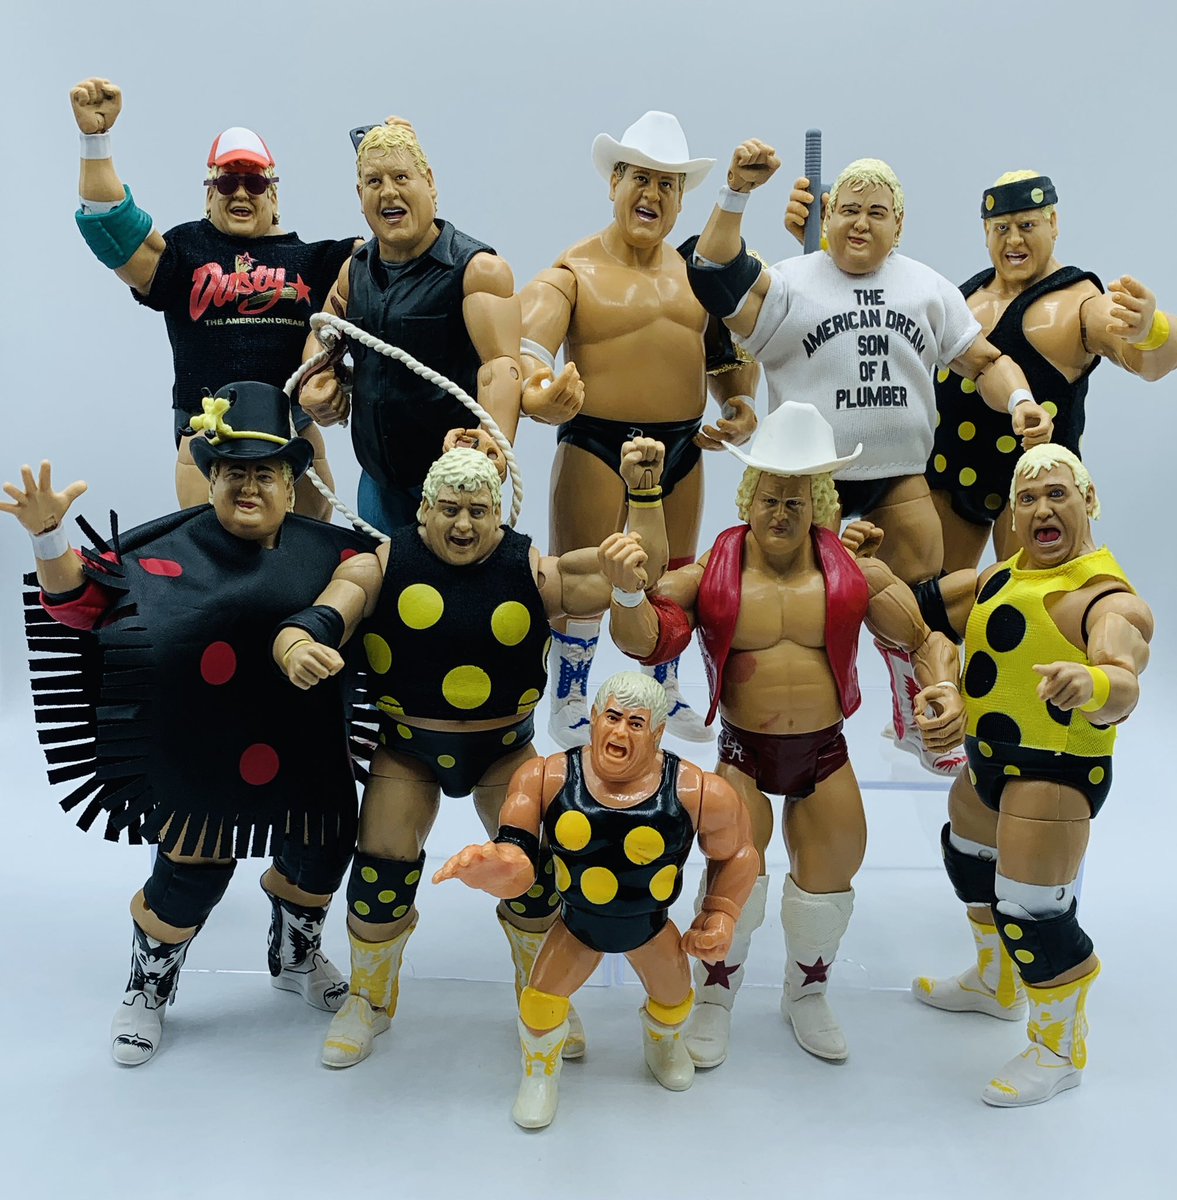 Top Ten Dusty Rhodes figures of all time for me youtu.be/i-Dfwer2awA #dustyrhodes #wcw #nwa #ecw #wwe #jakks #mattel #hasbro #wrestling #actionfigures #toys #toy #wrestling #scratchthatfigureitch